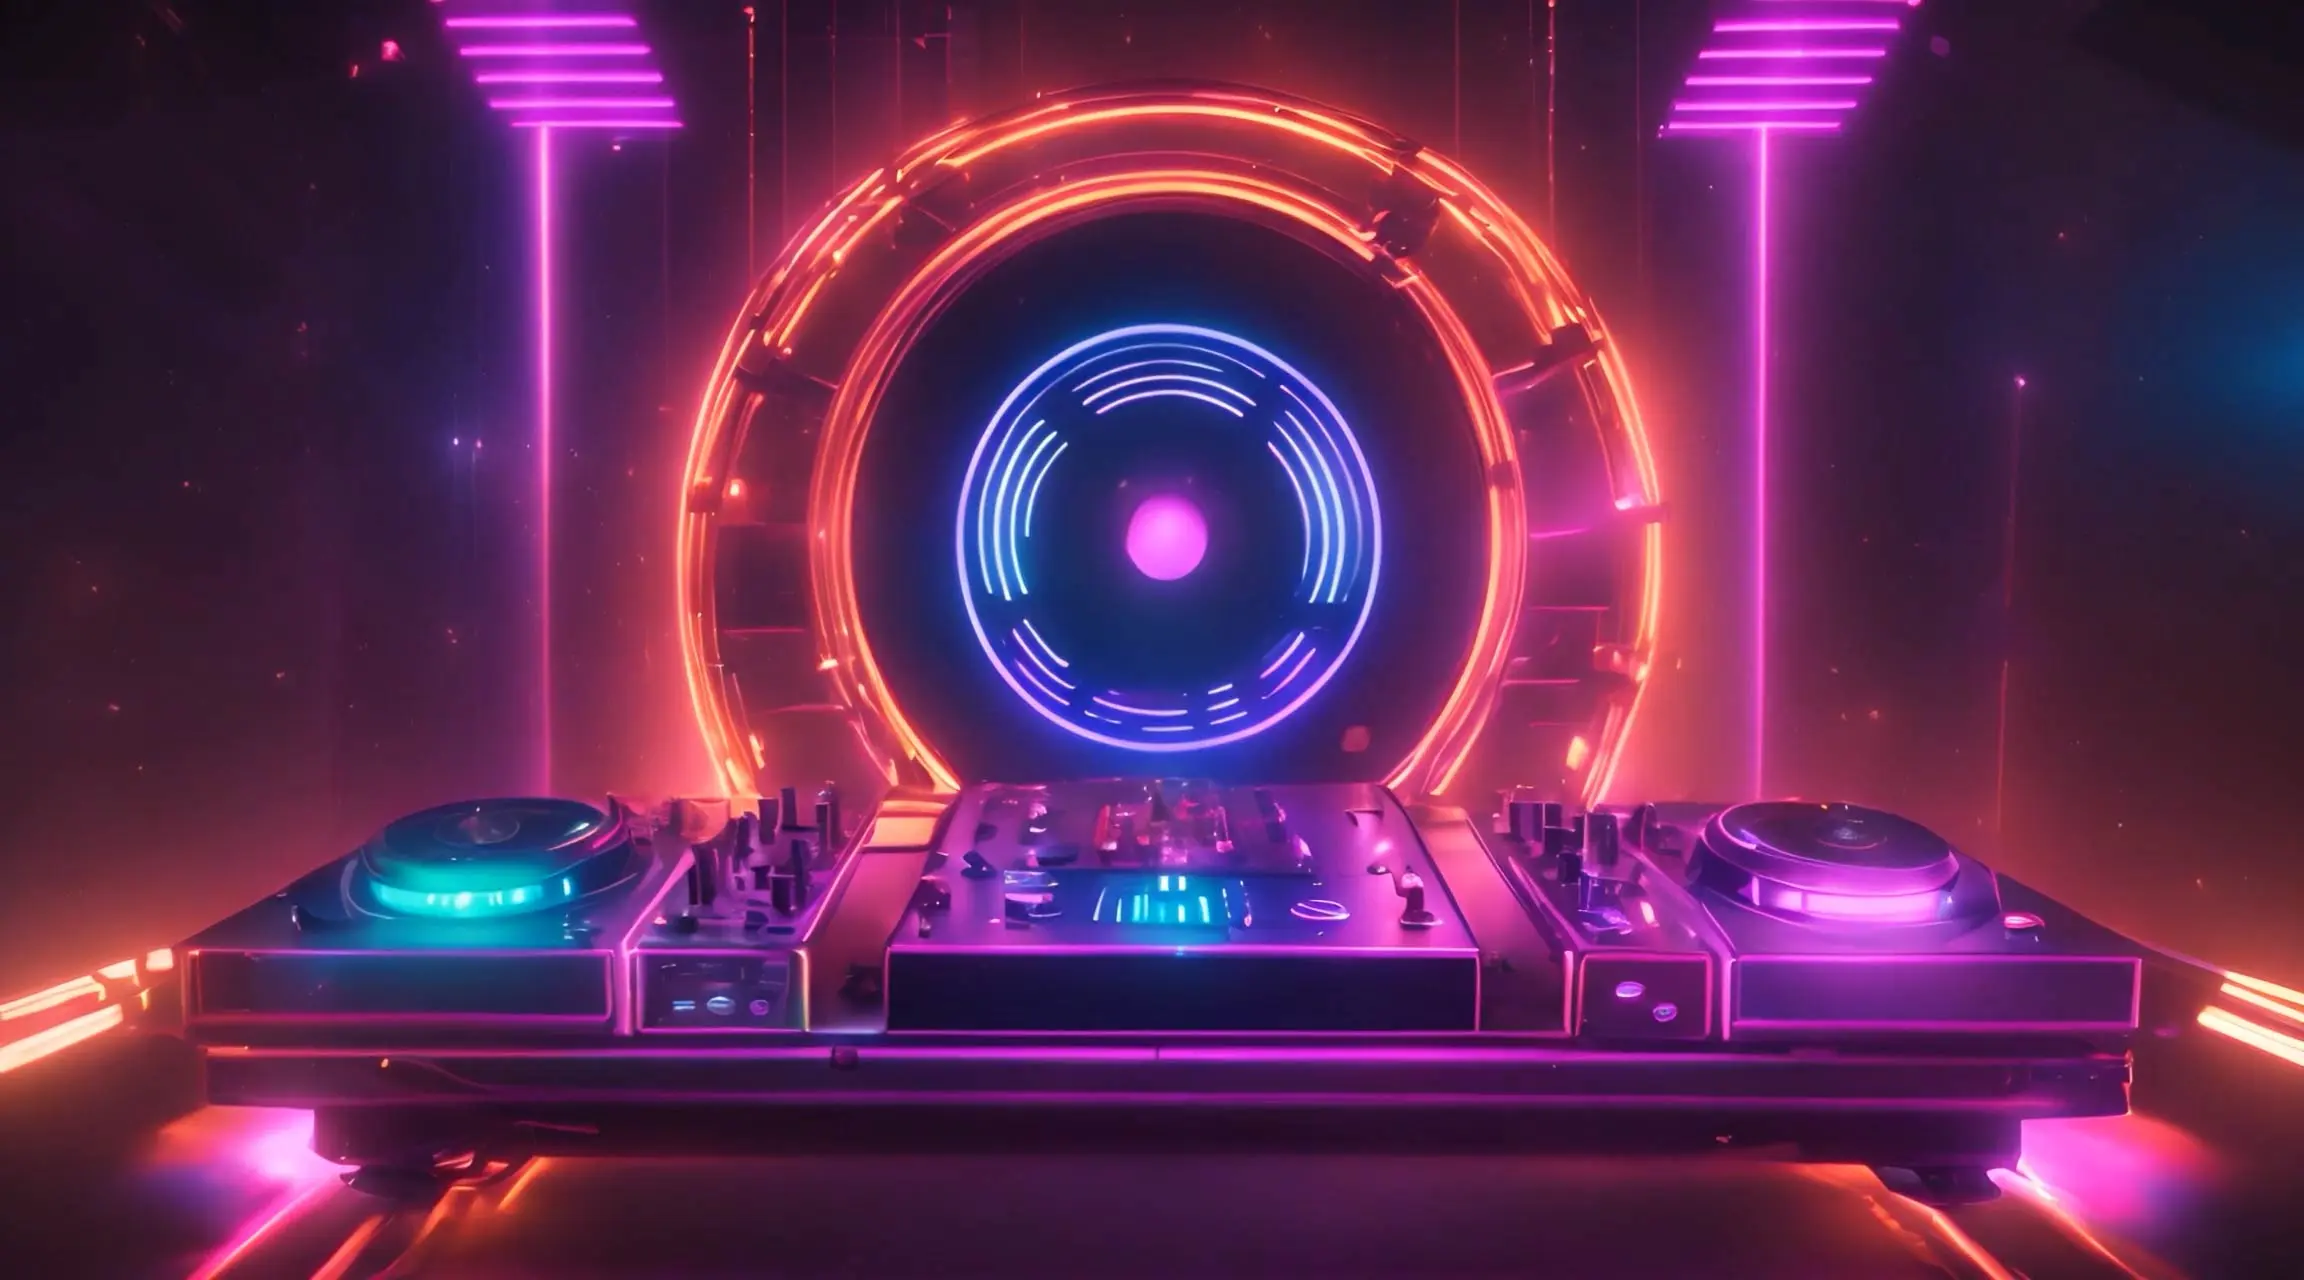 Neon DJ Booth Portal Vibrant Music Event Backdrop